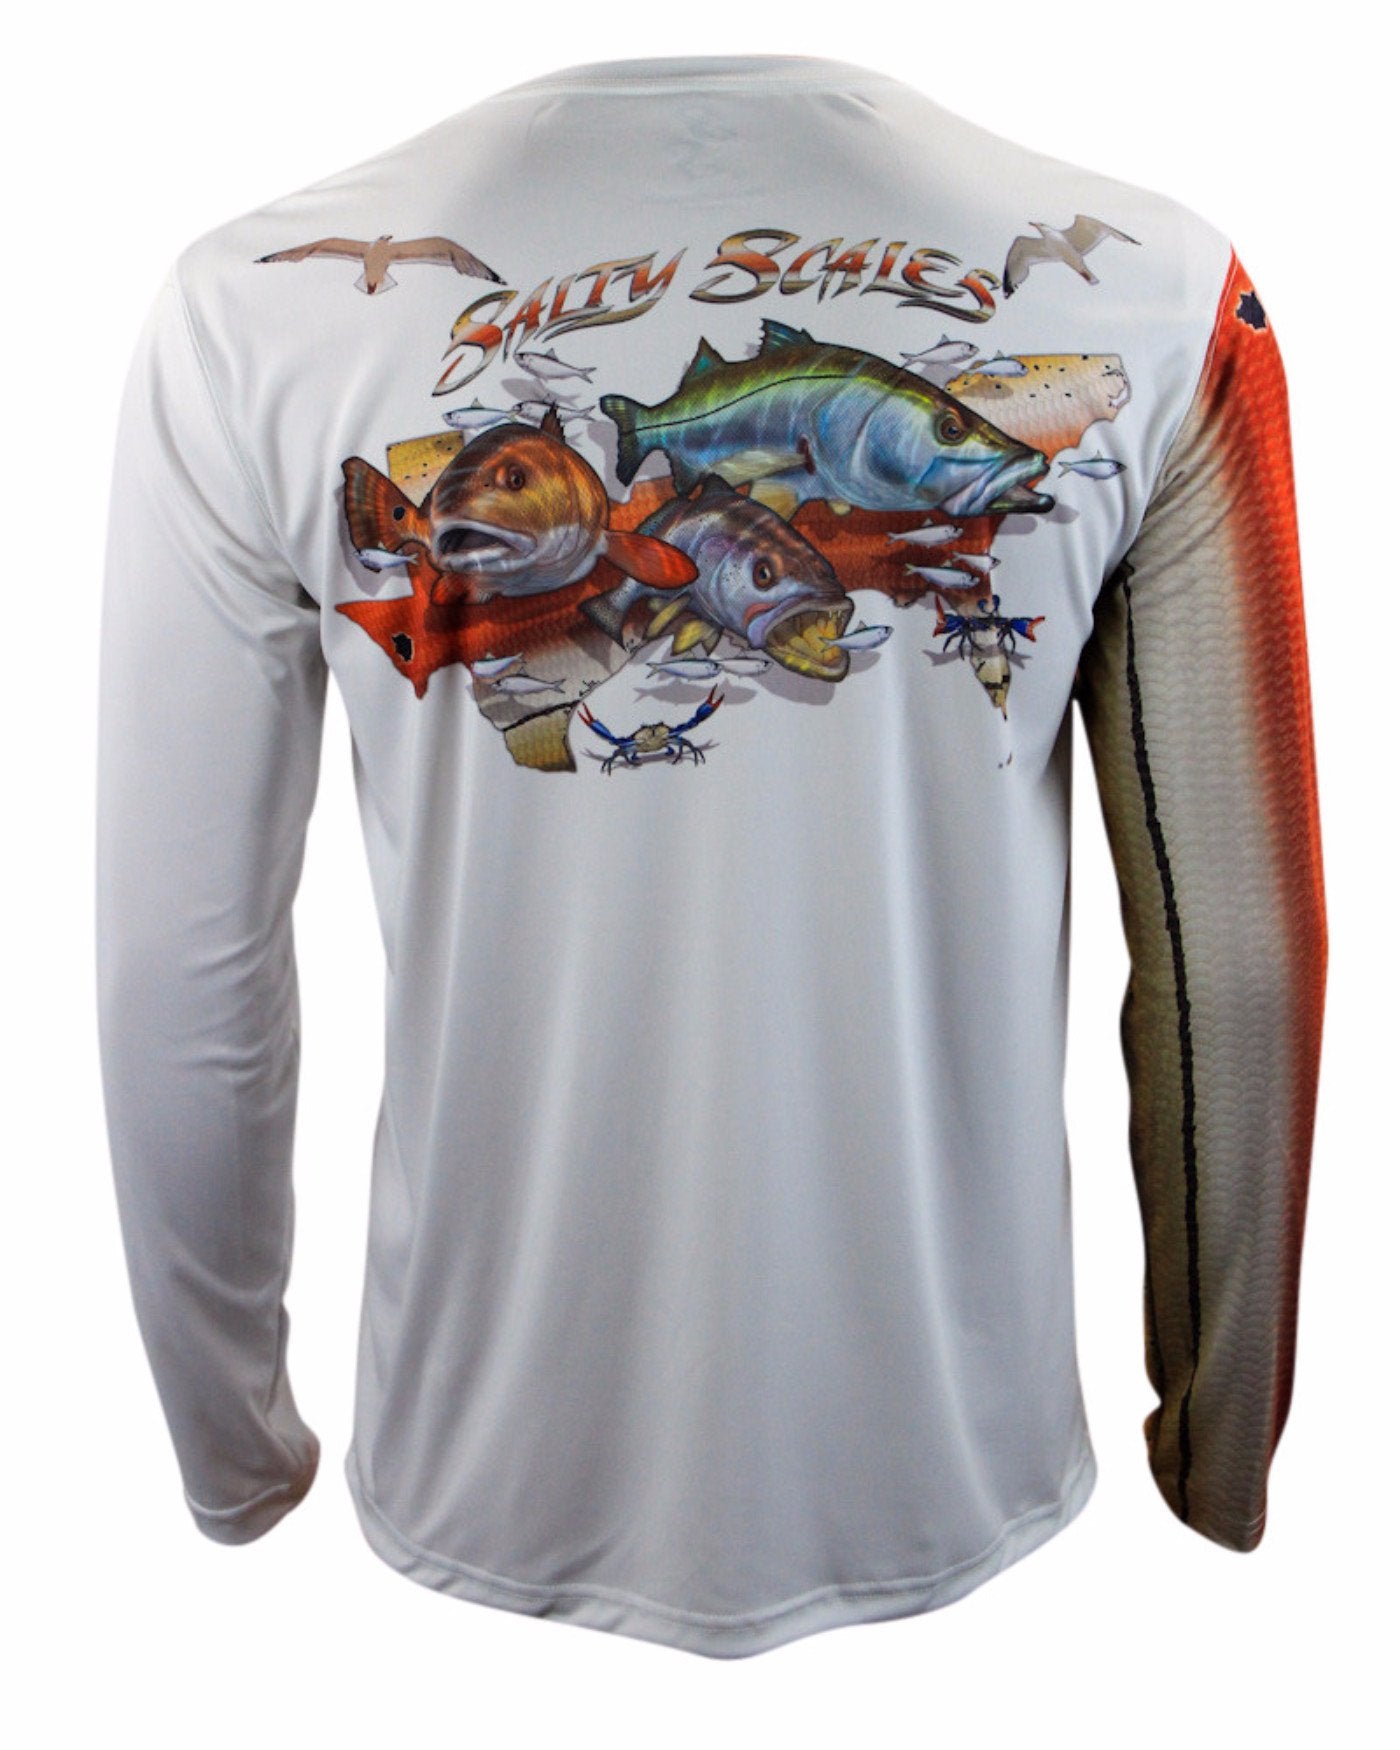 Inshore Slam Fishing Shirt for Men XXXL,SaltyScales